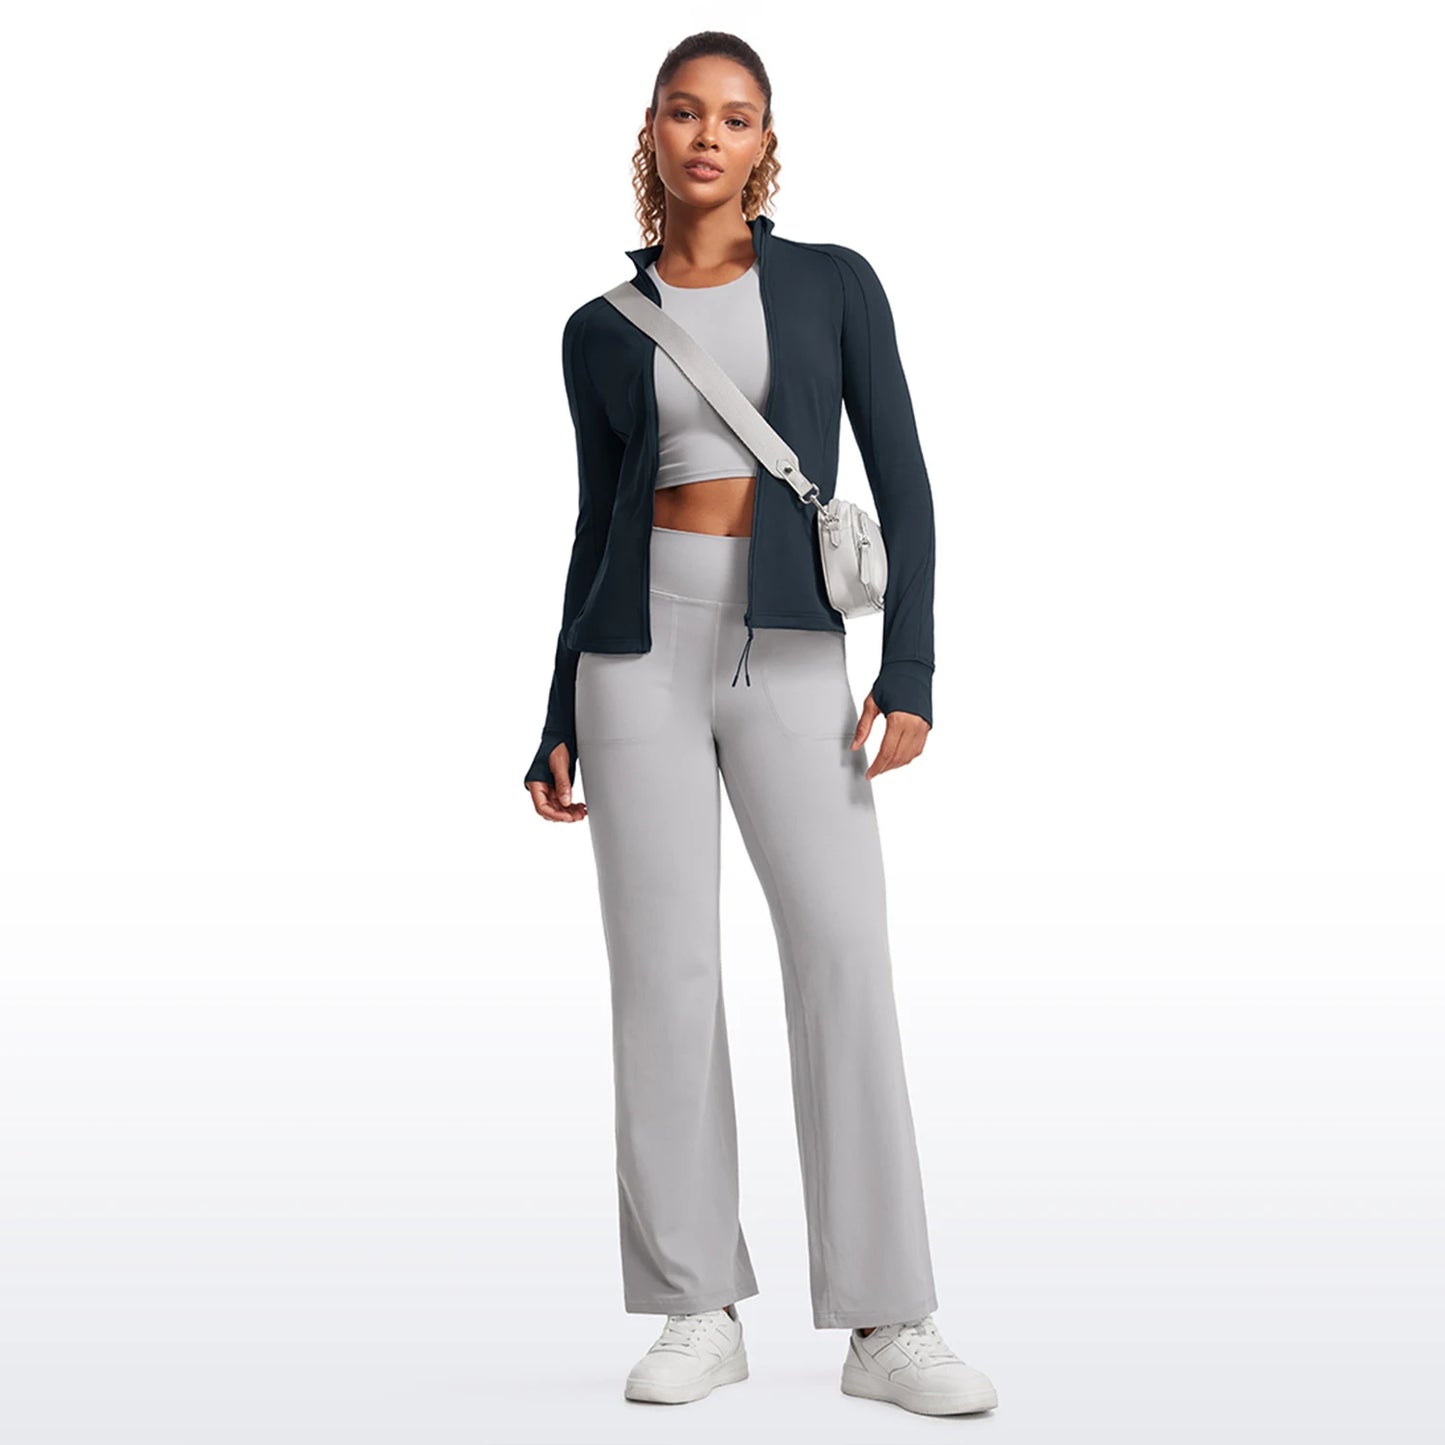 EmpowerHer  Slim Fit Zip-Up Workout Jacket